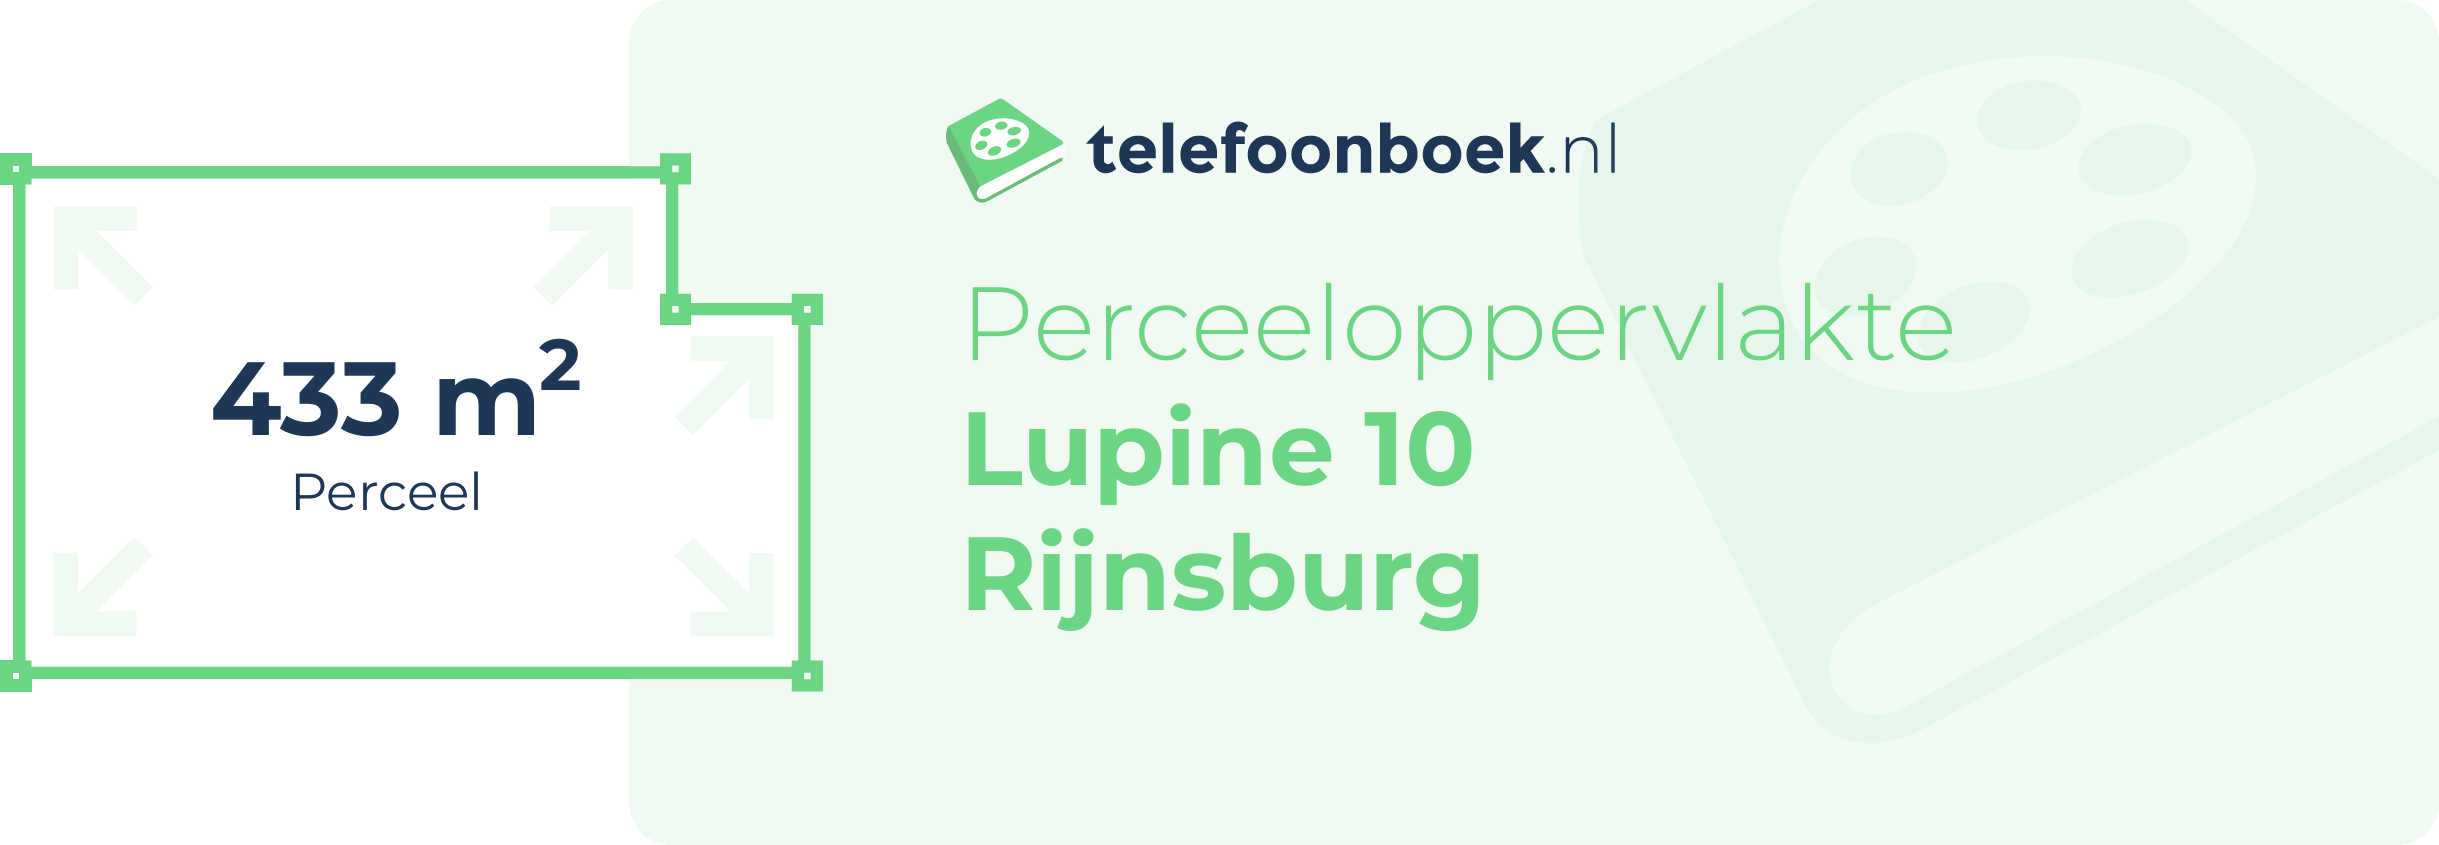 Perceeloppervlakte Lupine 10 Rijnsburg